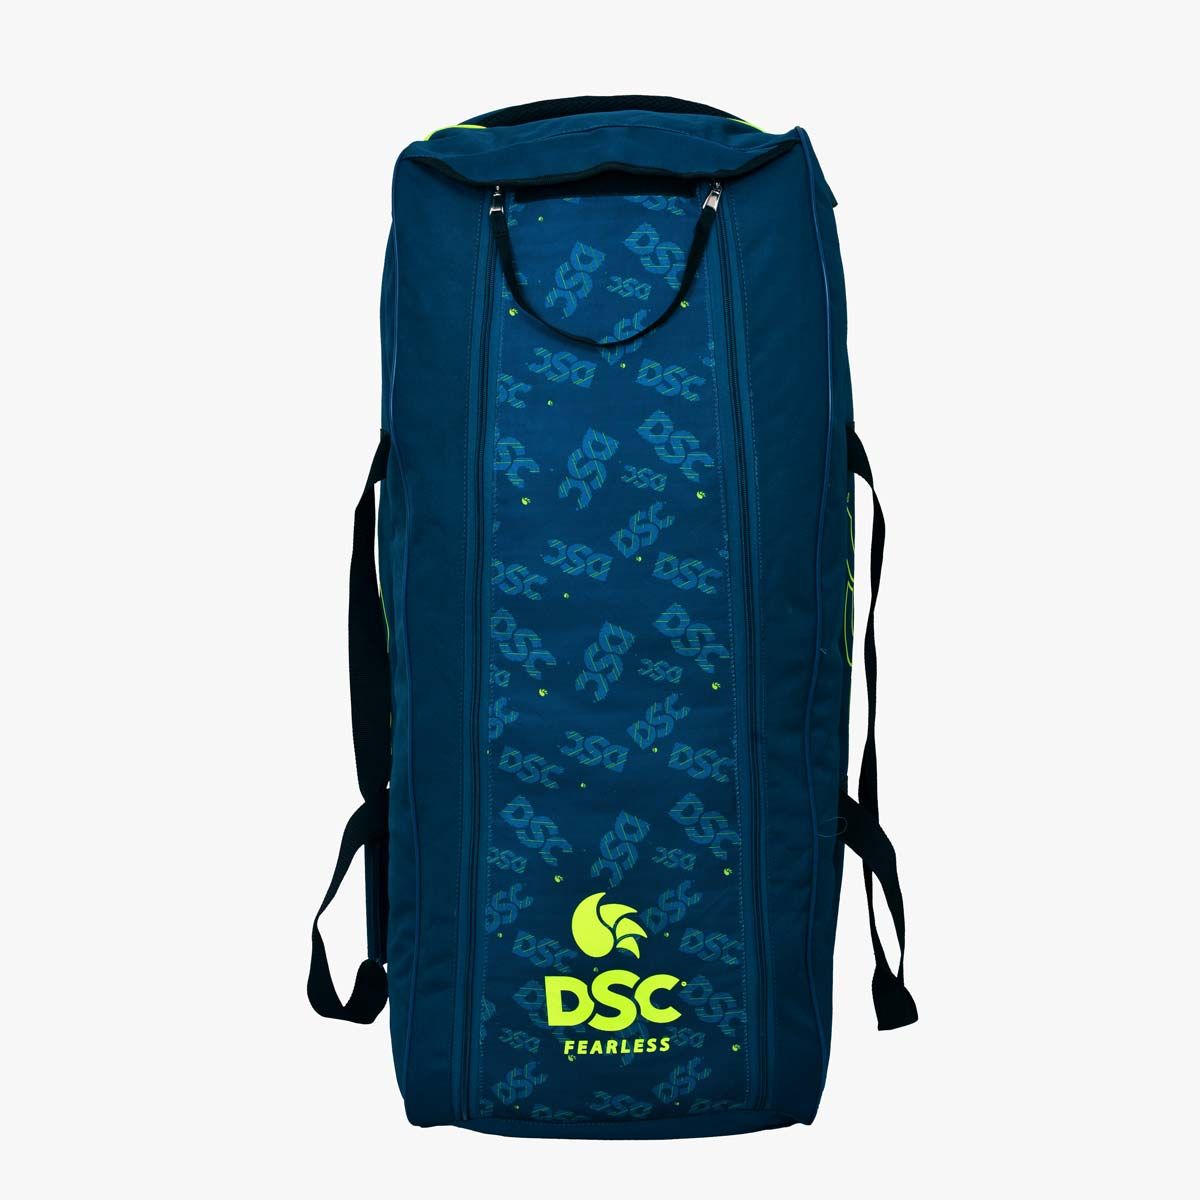 DSC Cricket Condor Surge Wheelie Kit Bag